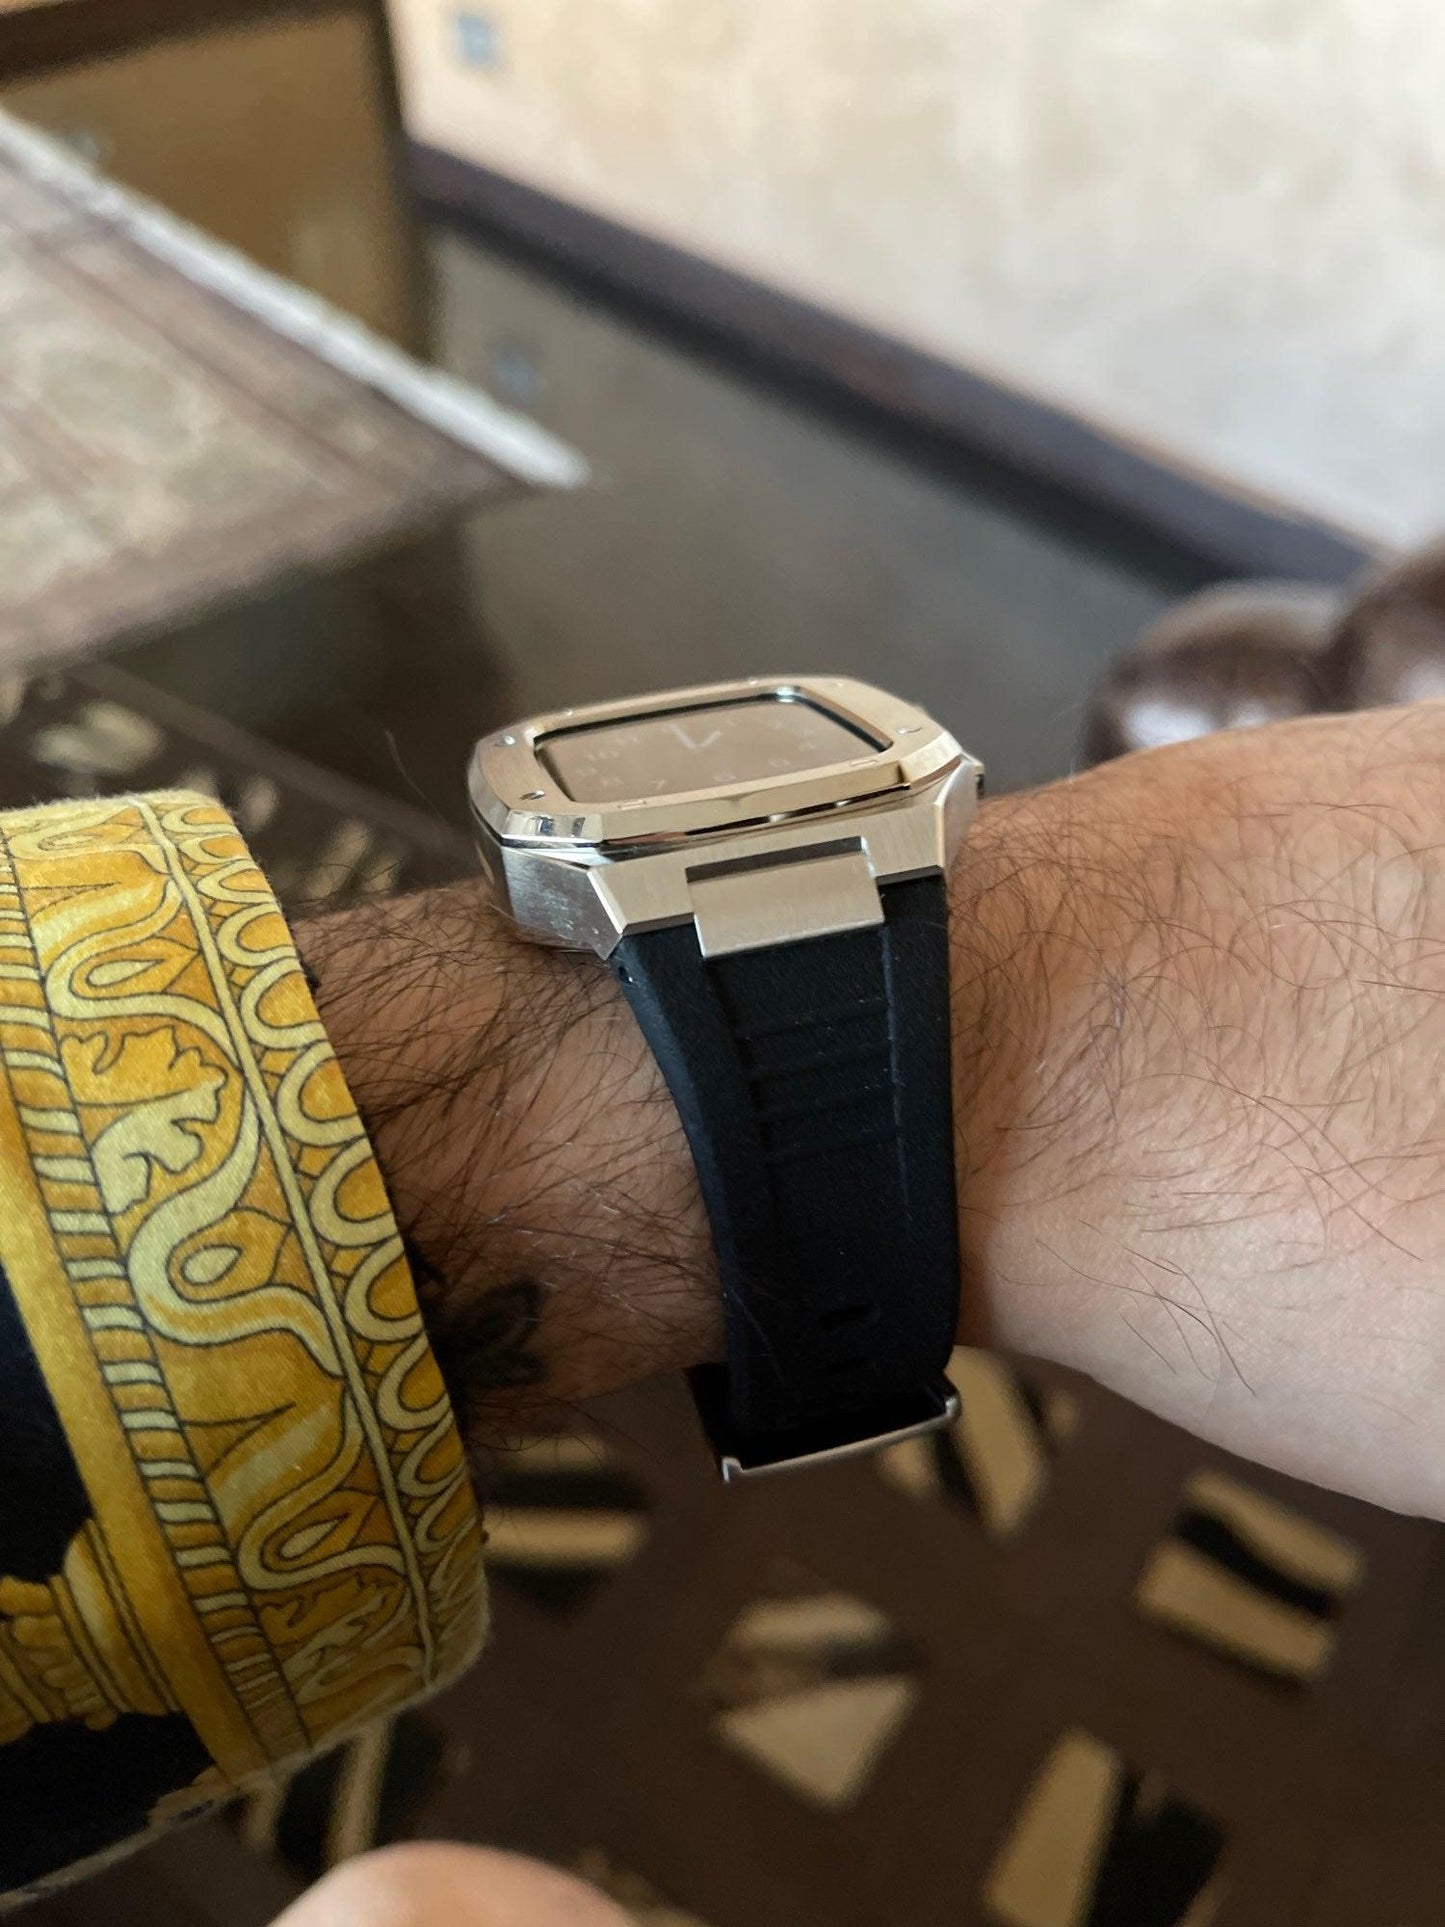 Stainless Steel Apple Watch Band - arleathercraft